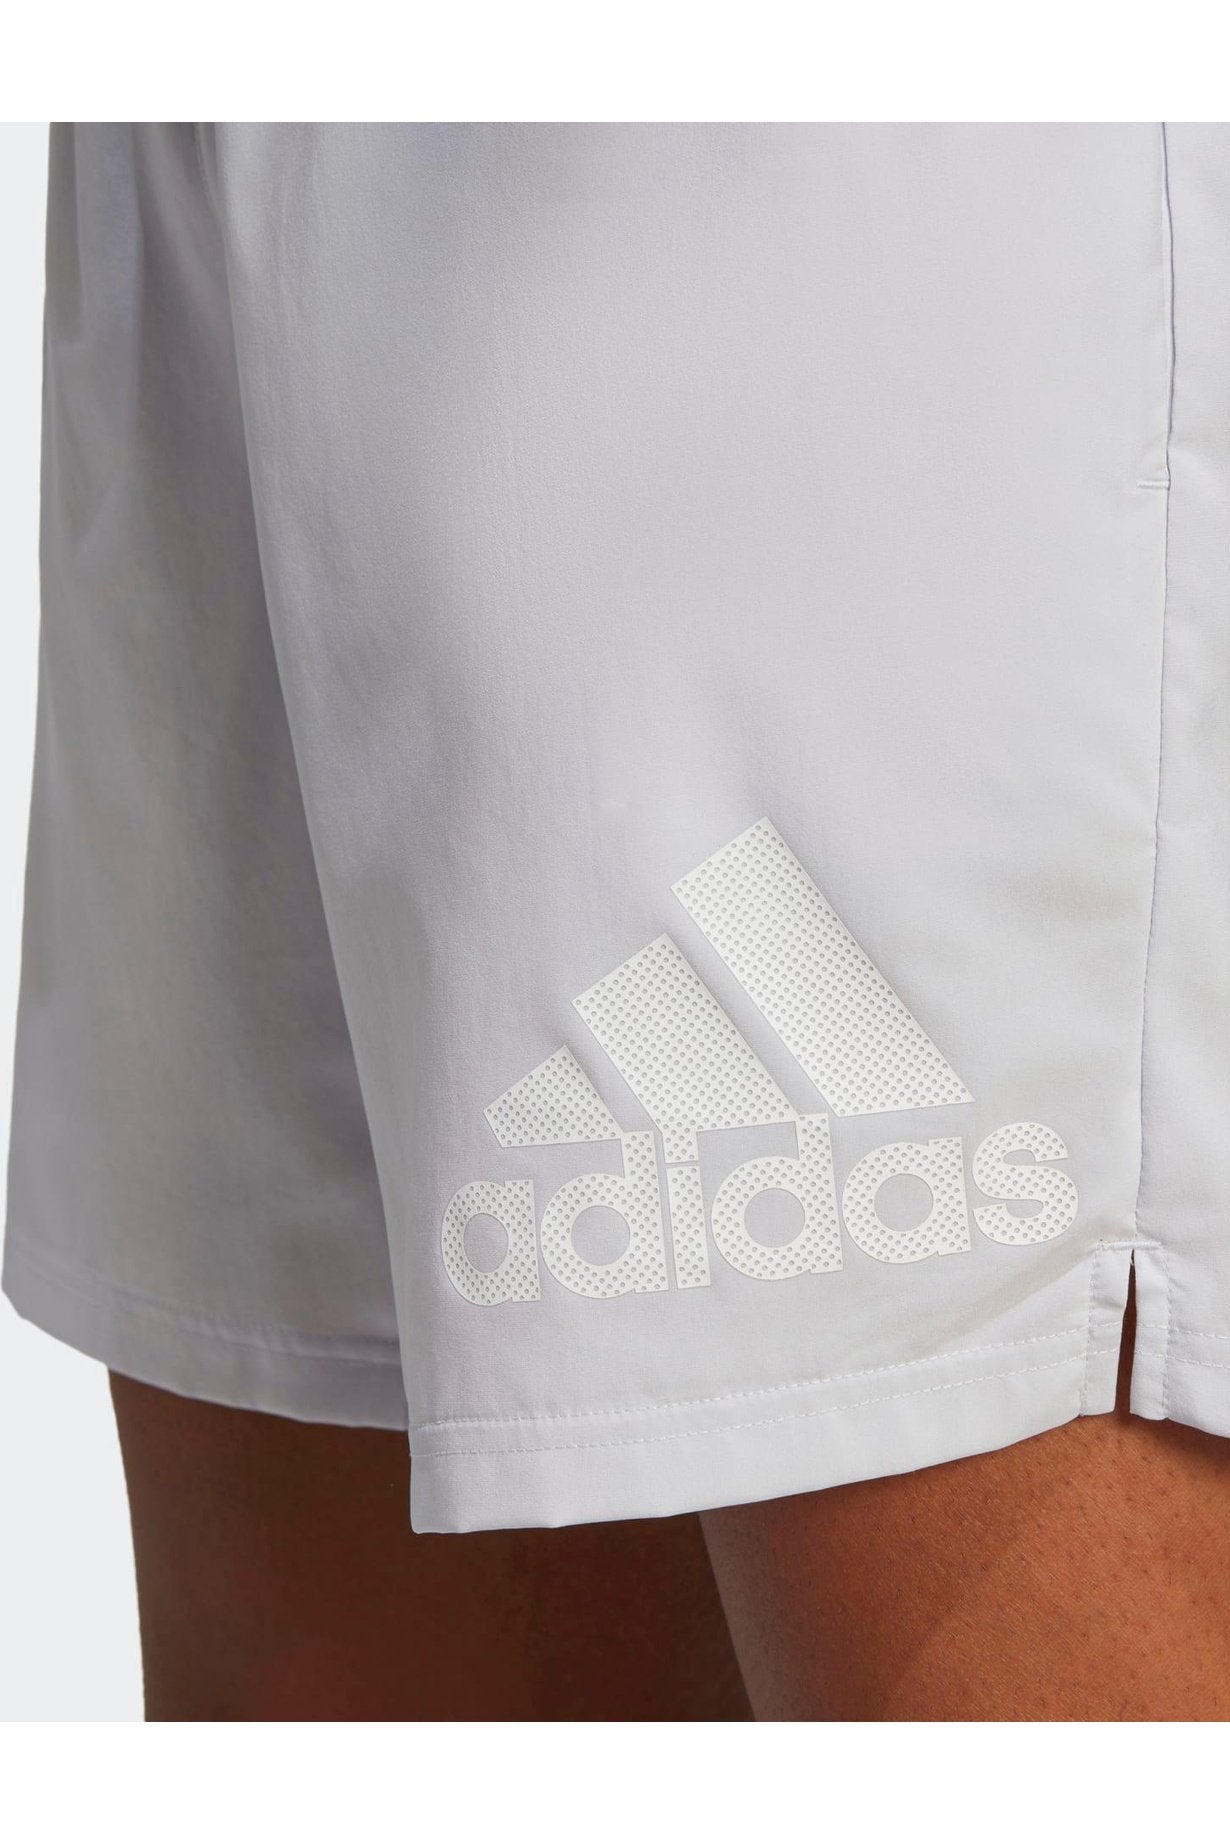 ADIDAS - מכנסיים קצרים לגבר RUN IT SHORT M בצבע אפור בהיר - MASHBIR//365